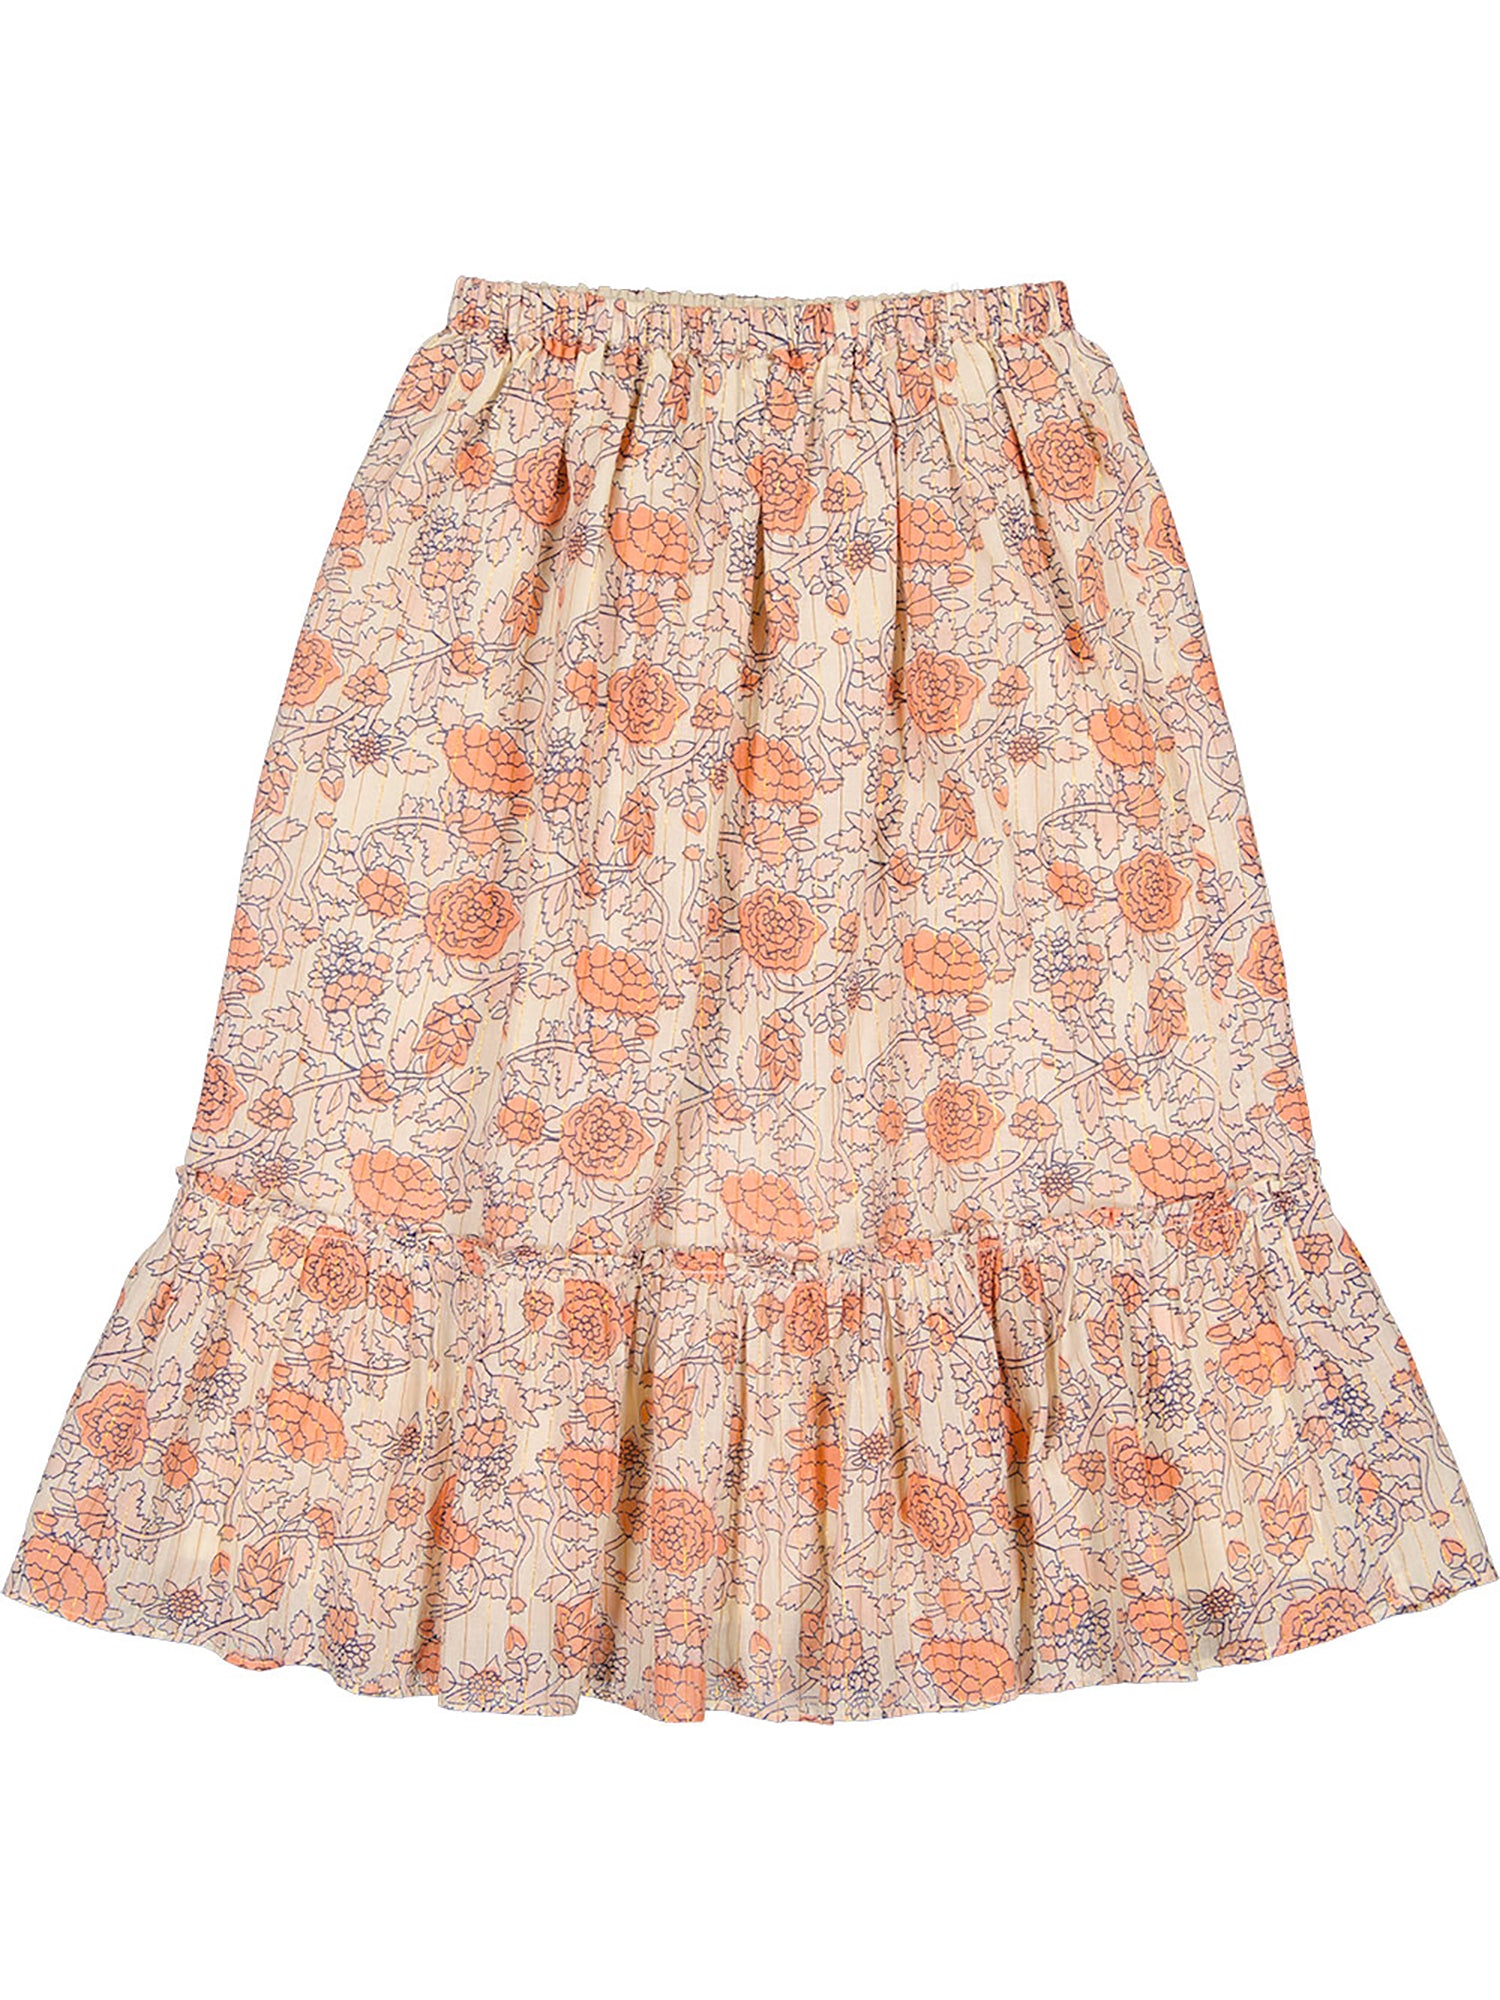 Louis Louise Rachel Lurex Stripe Skirt - Skirts